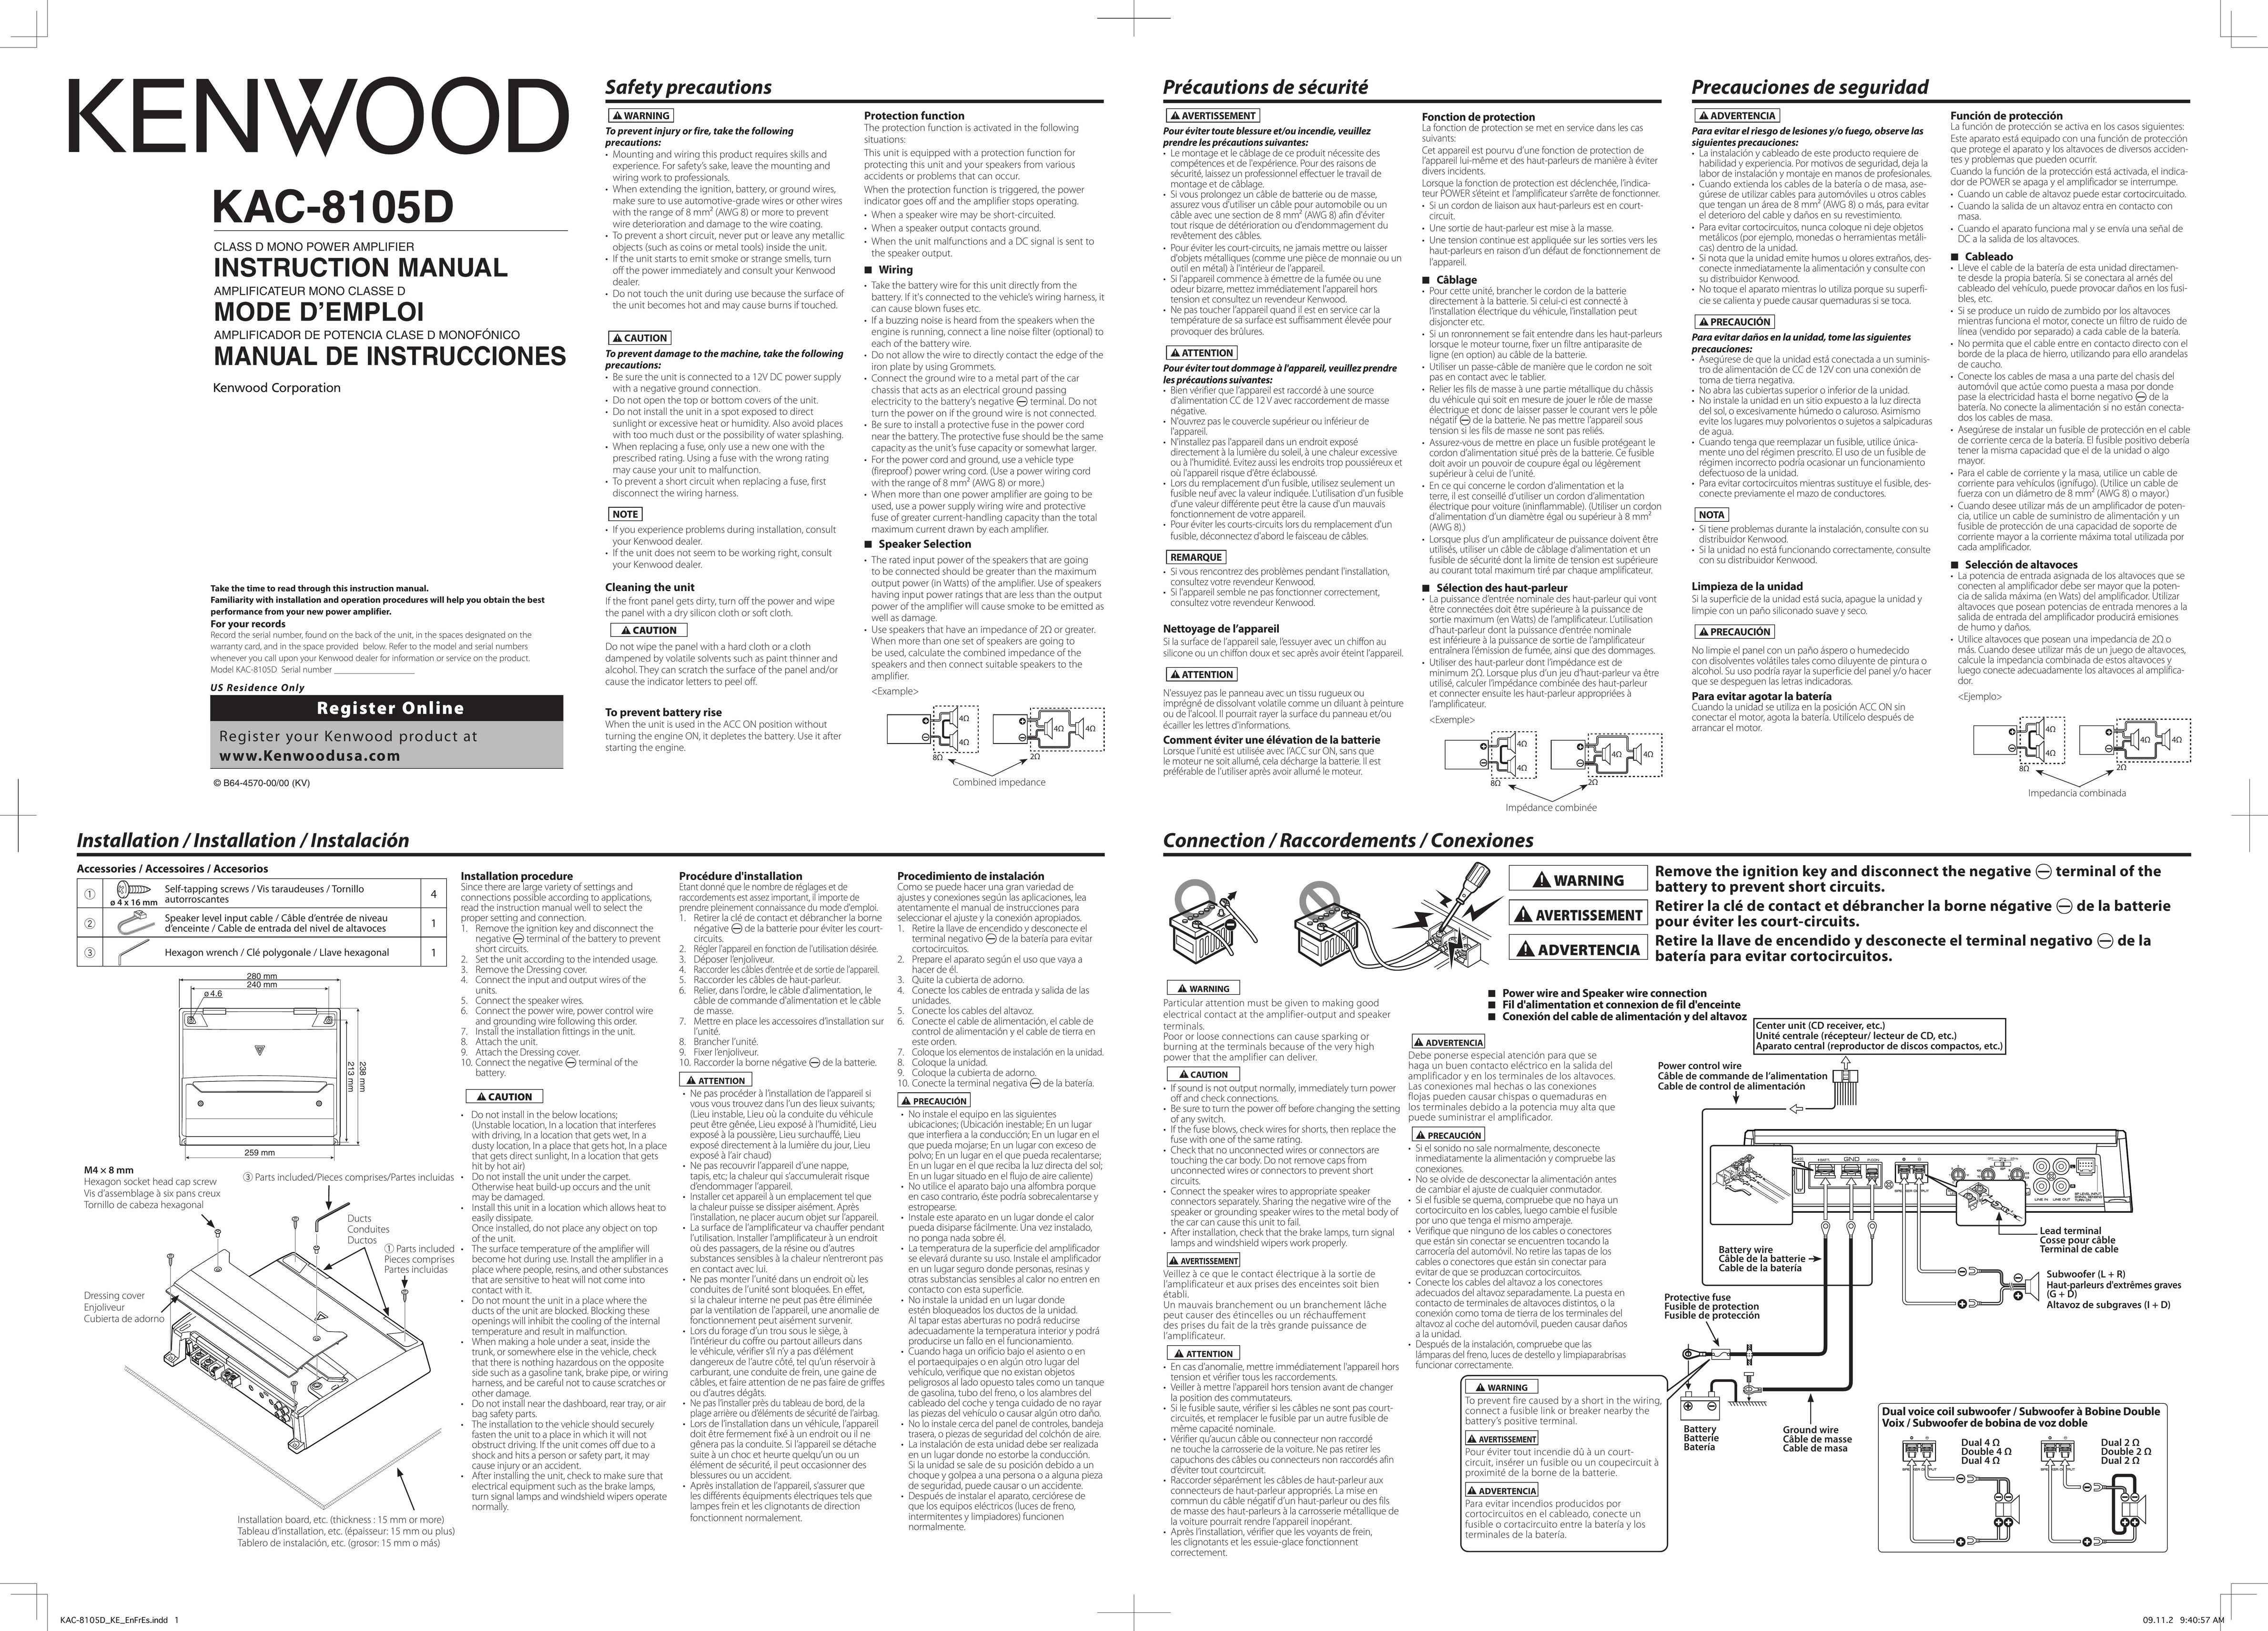 Kenwood KAC-8105D Car Amplifier User Manual